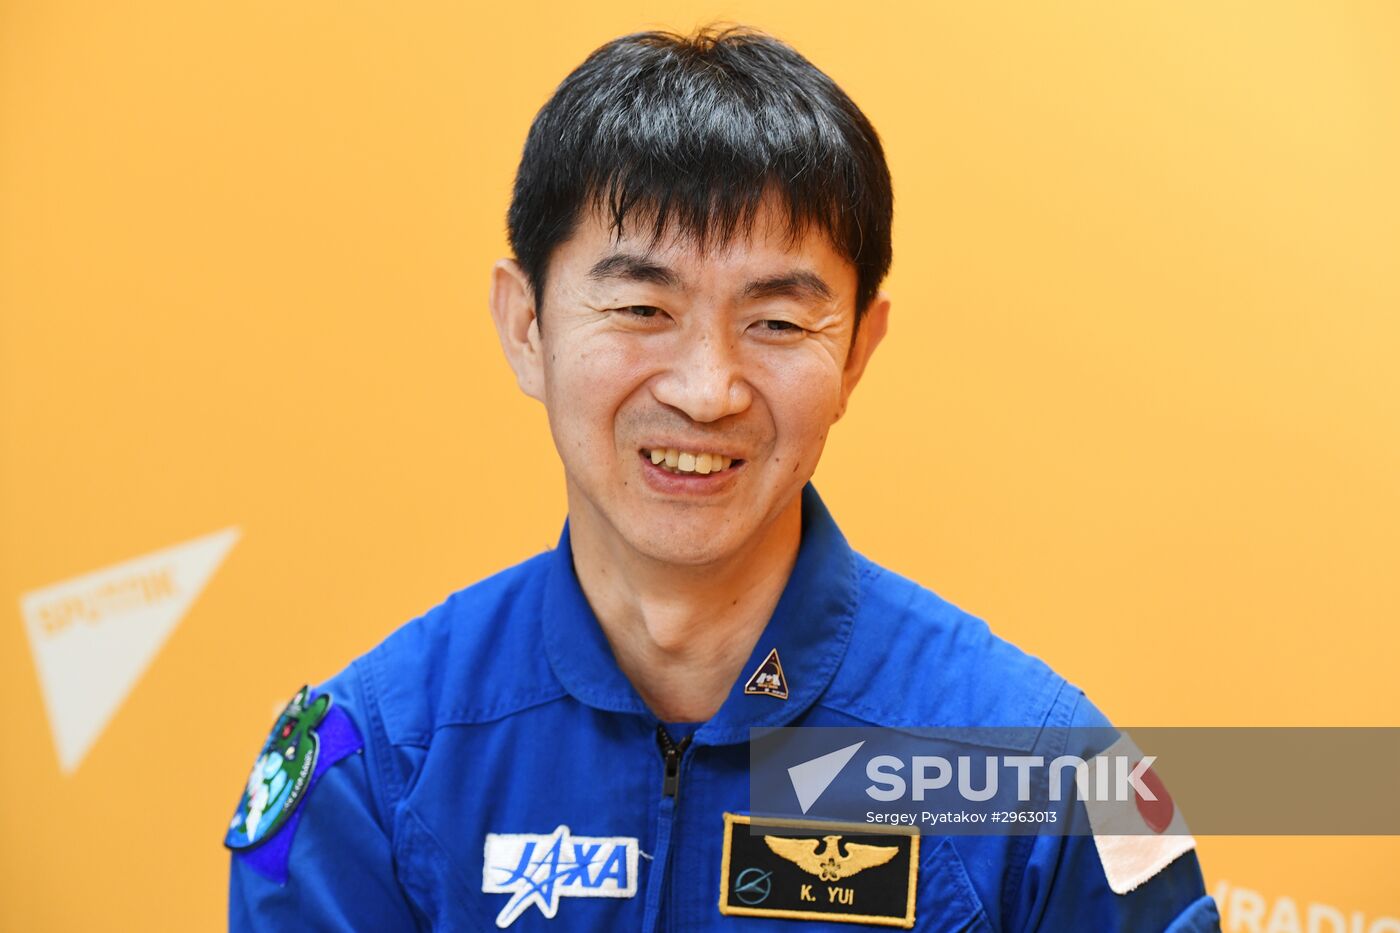 Interview with Japanese cosmonaut Kimiya Yui